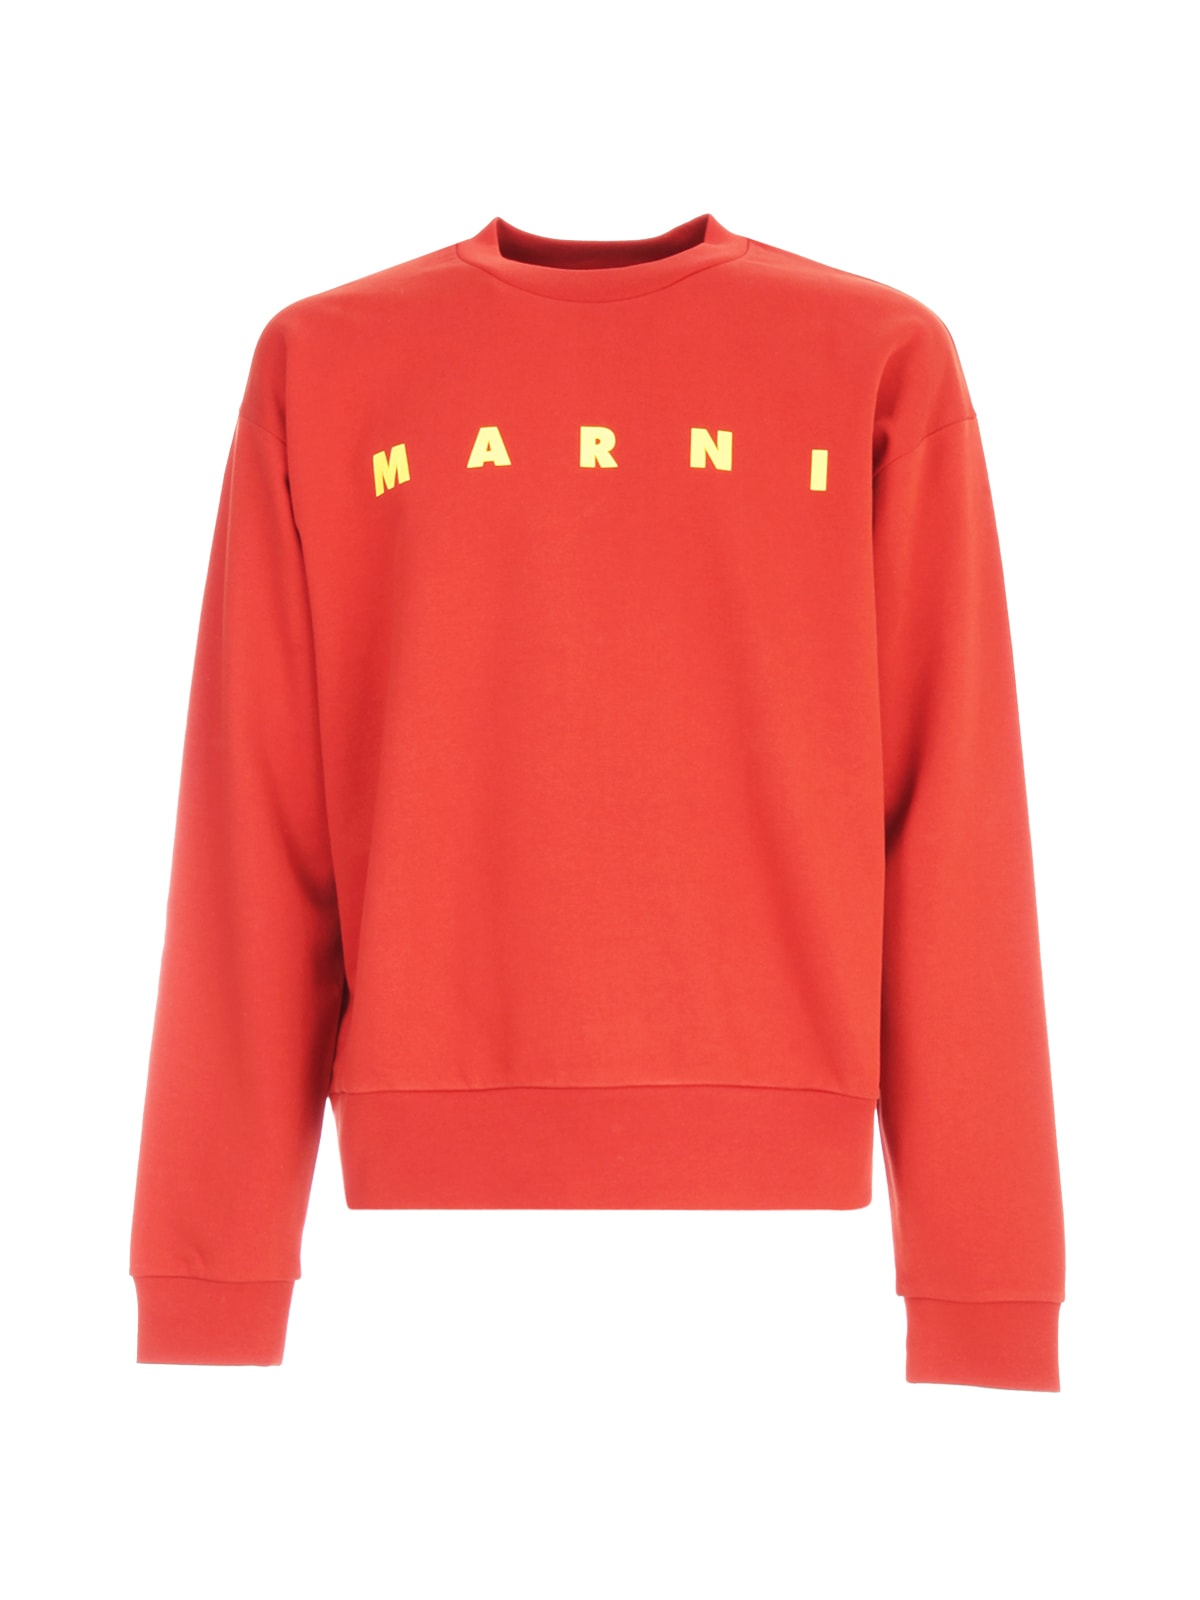 Marni Logo Classic Sweatshirt